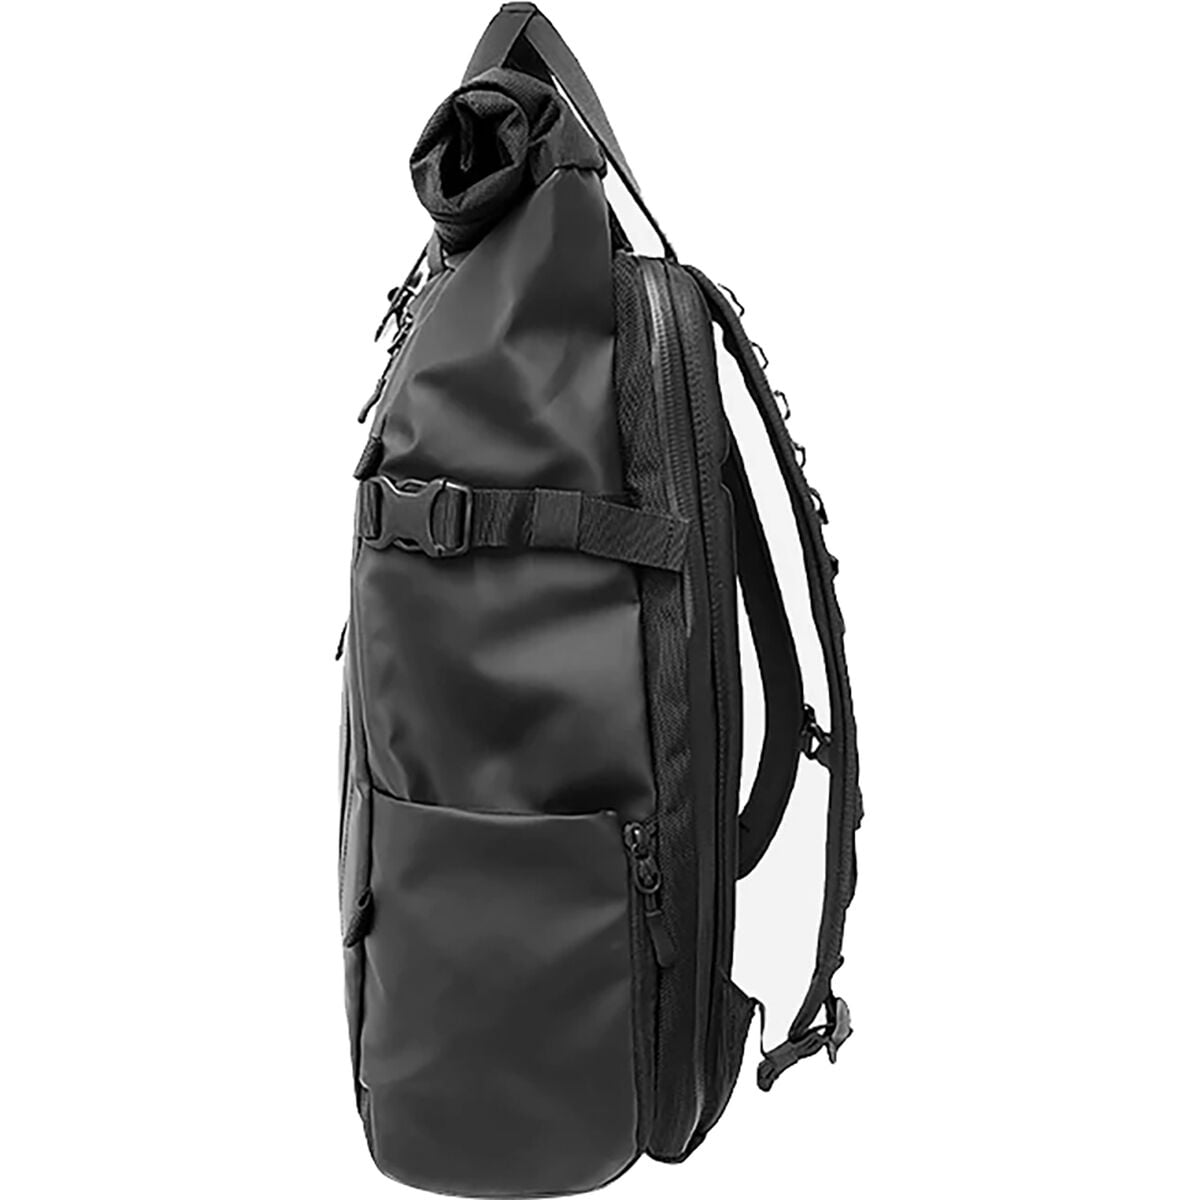 WANDRD PRVKE 21 Backpack - Travel